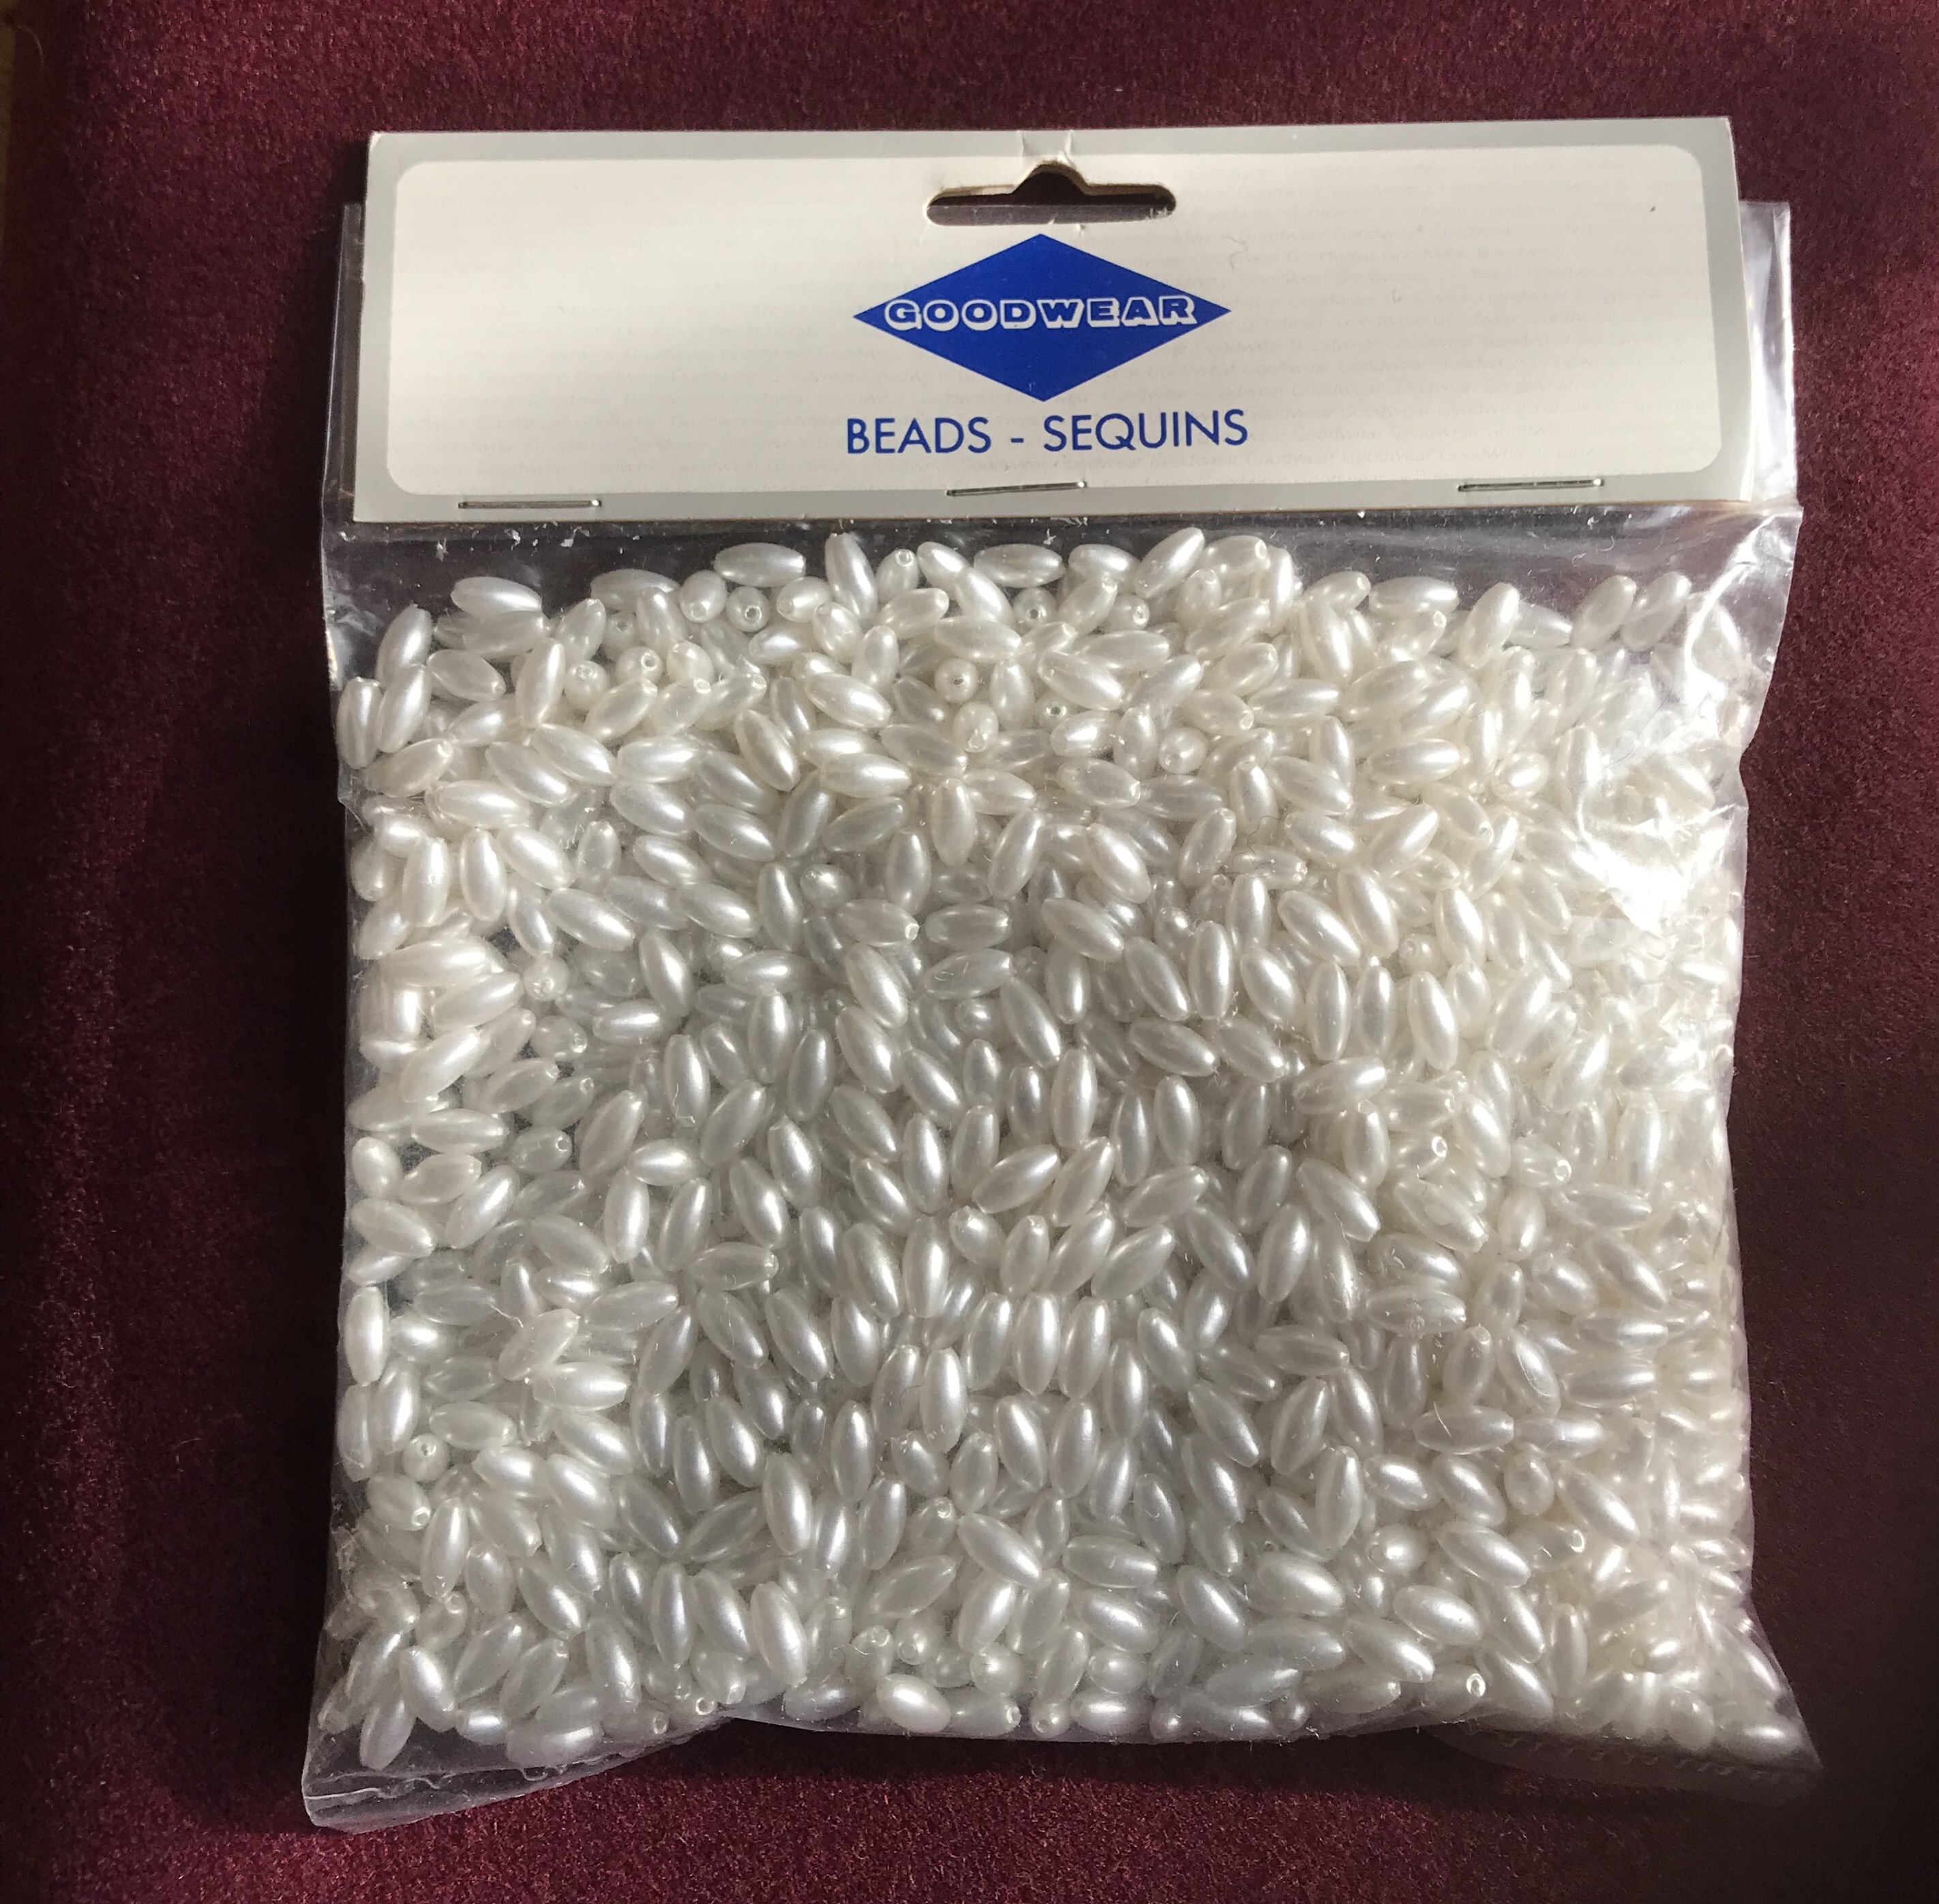 100grms bag of Goodwear Beads